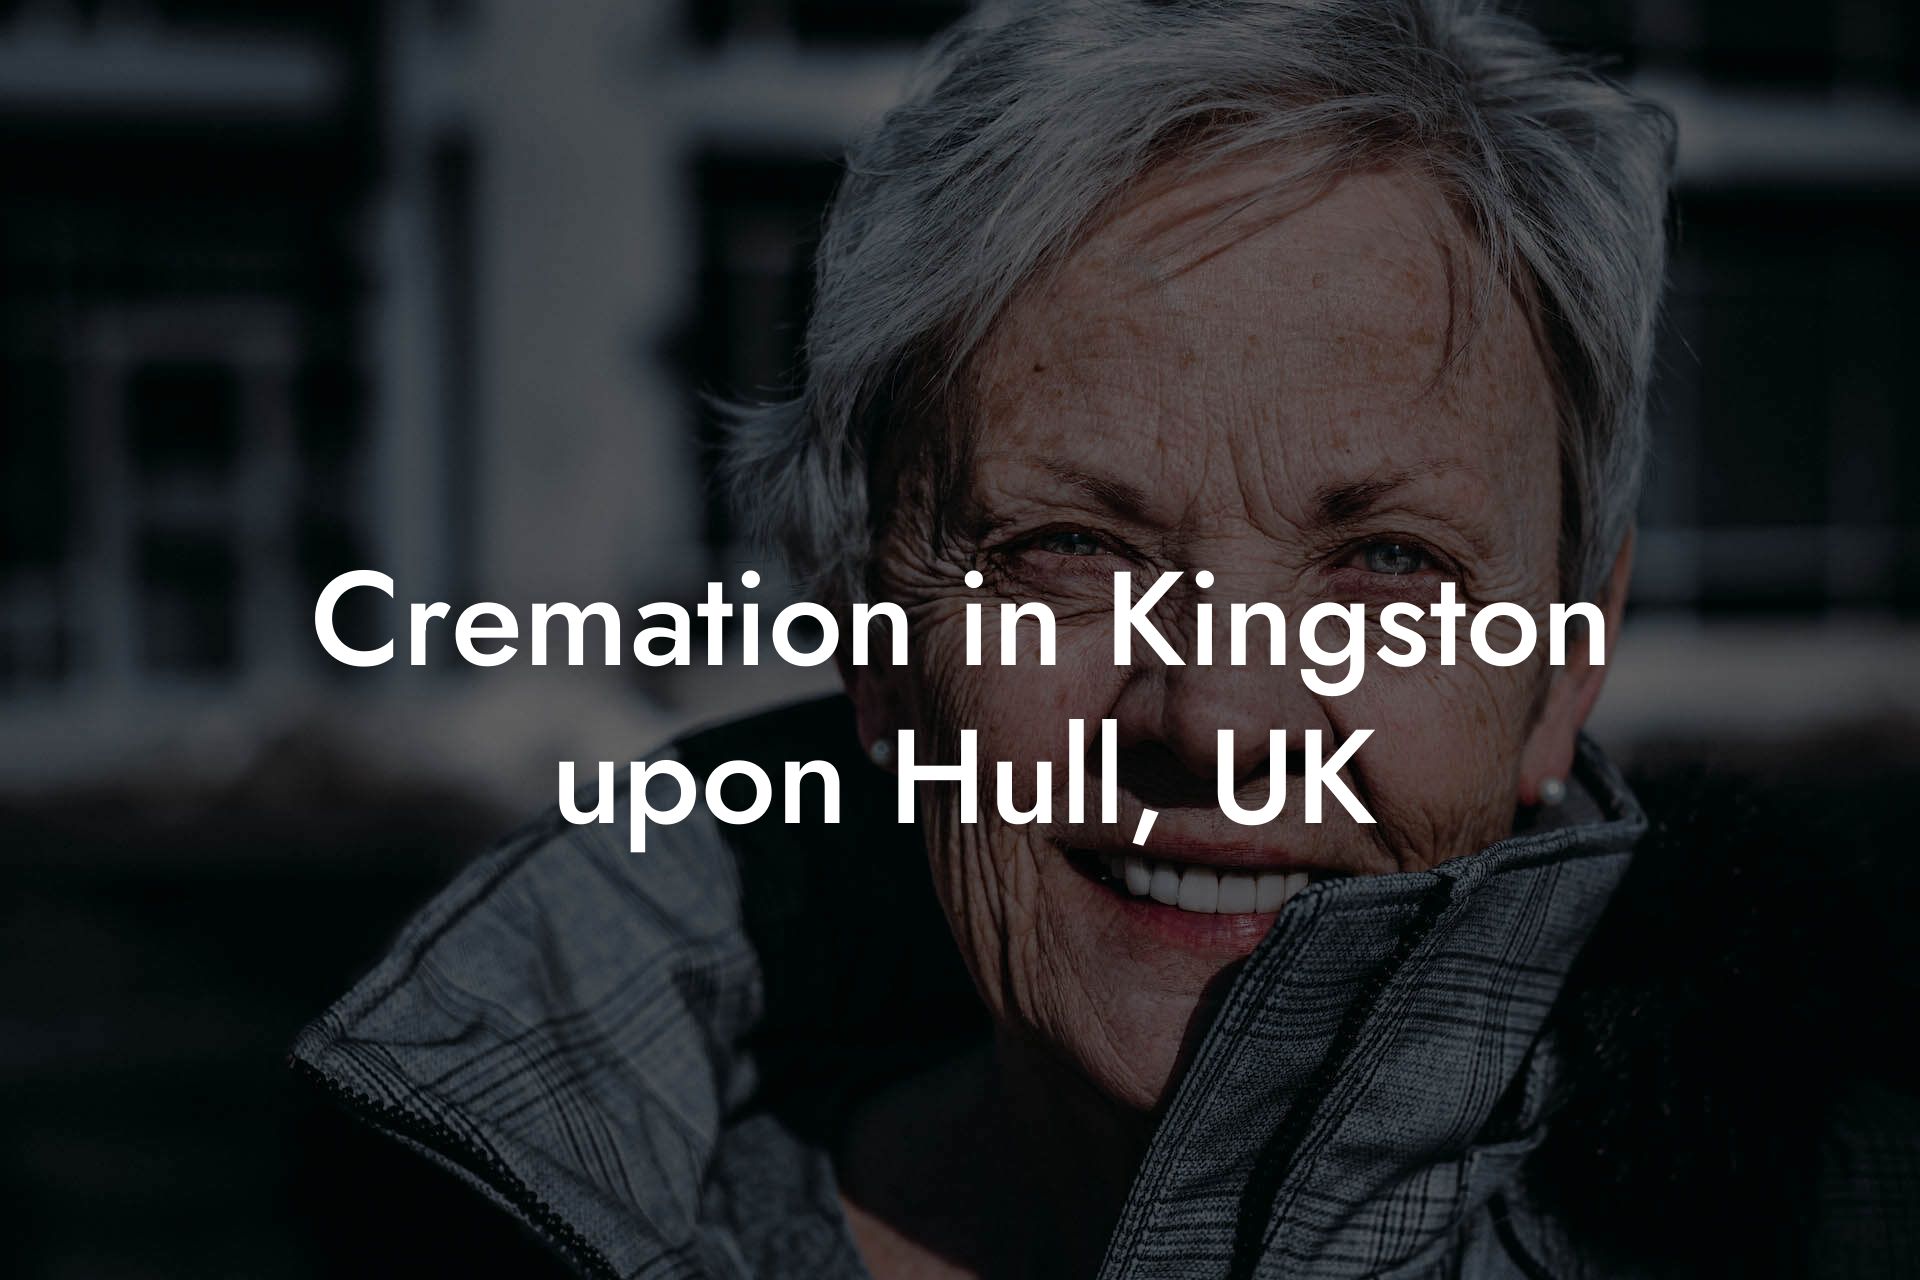 Cremation in Kingston upon Hull, UK